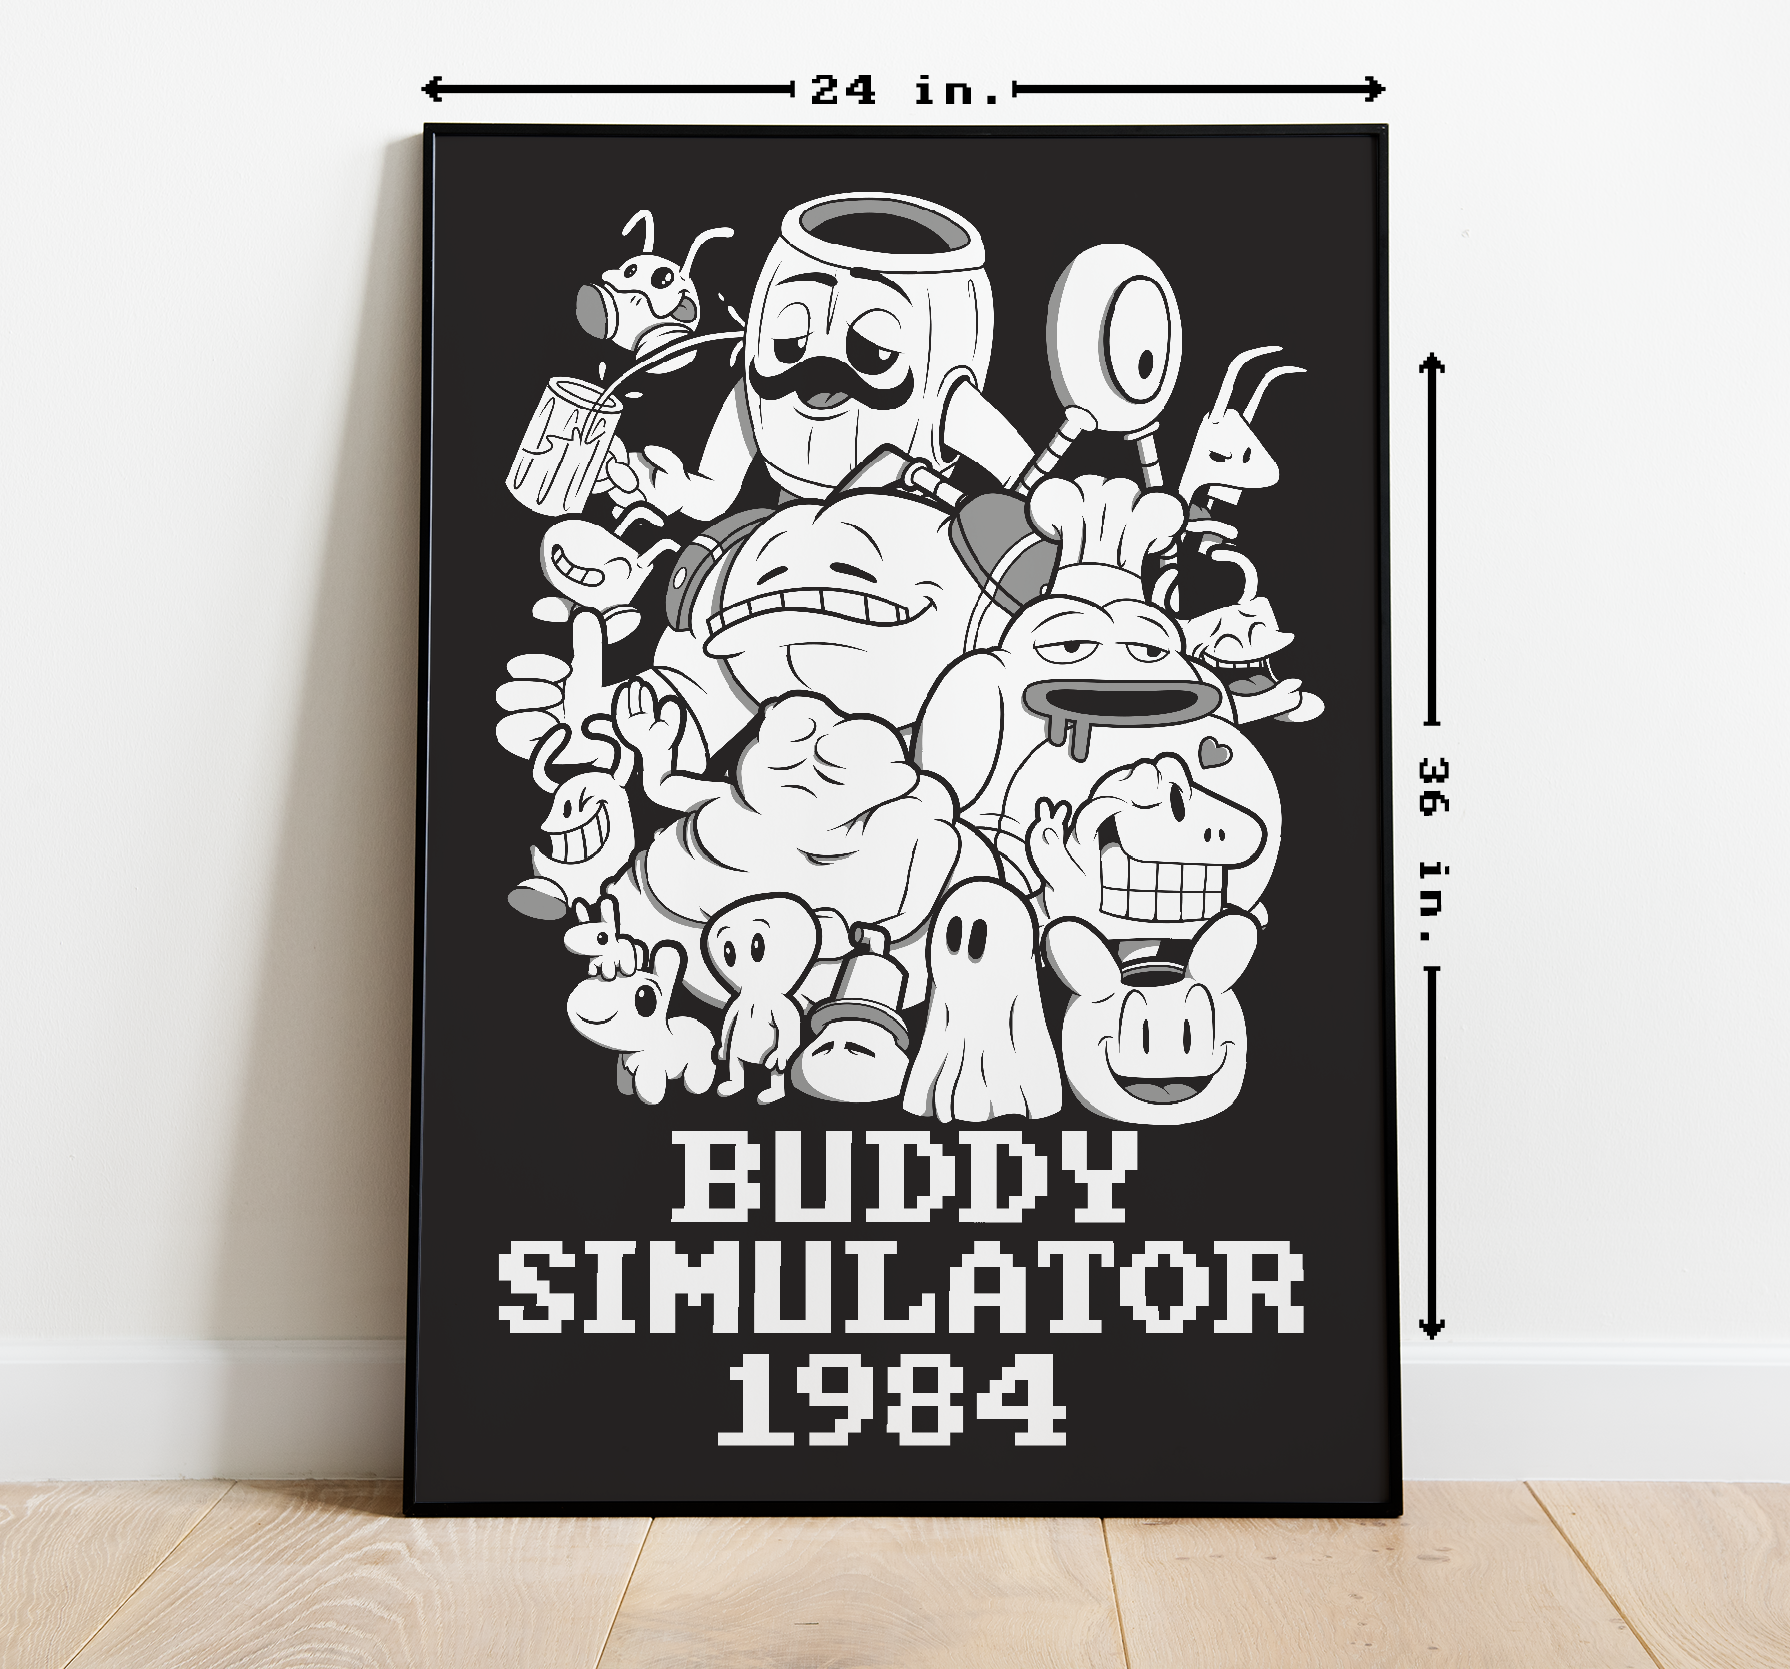 Buddy Simulator 1984 on Steam